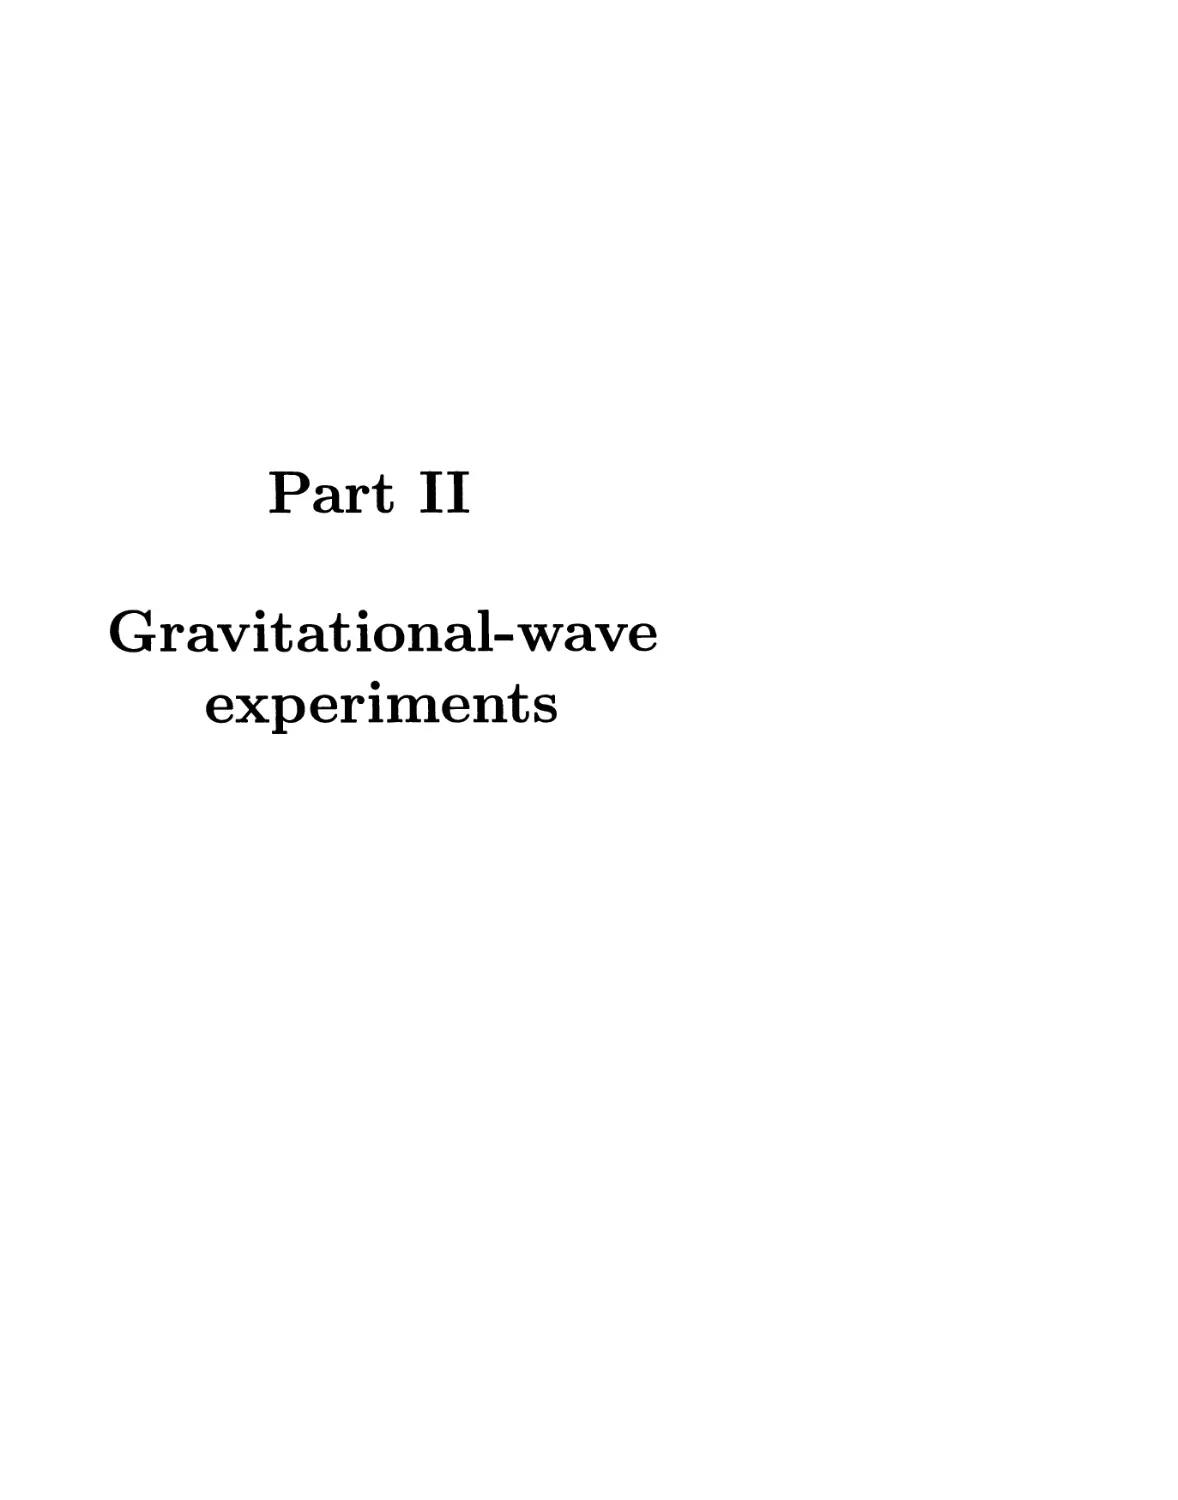 Part II: Gravitational-wave experiments 333